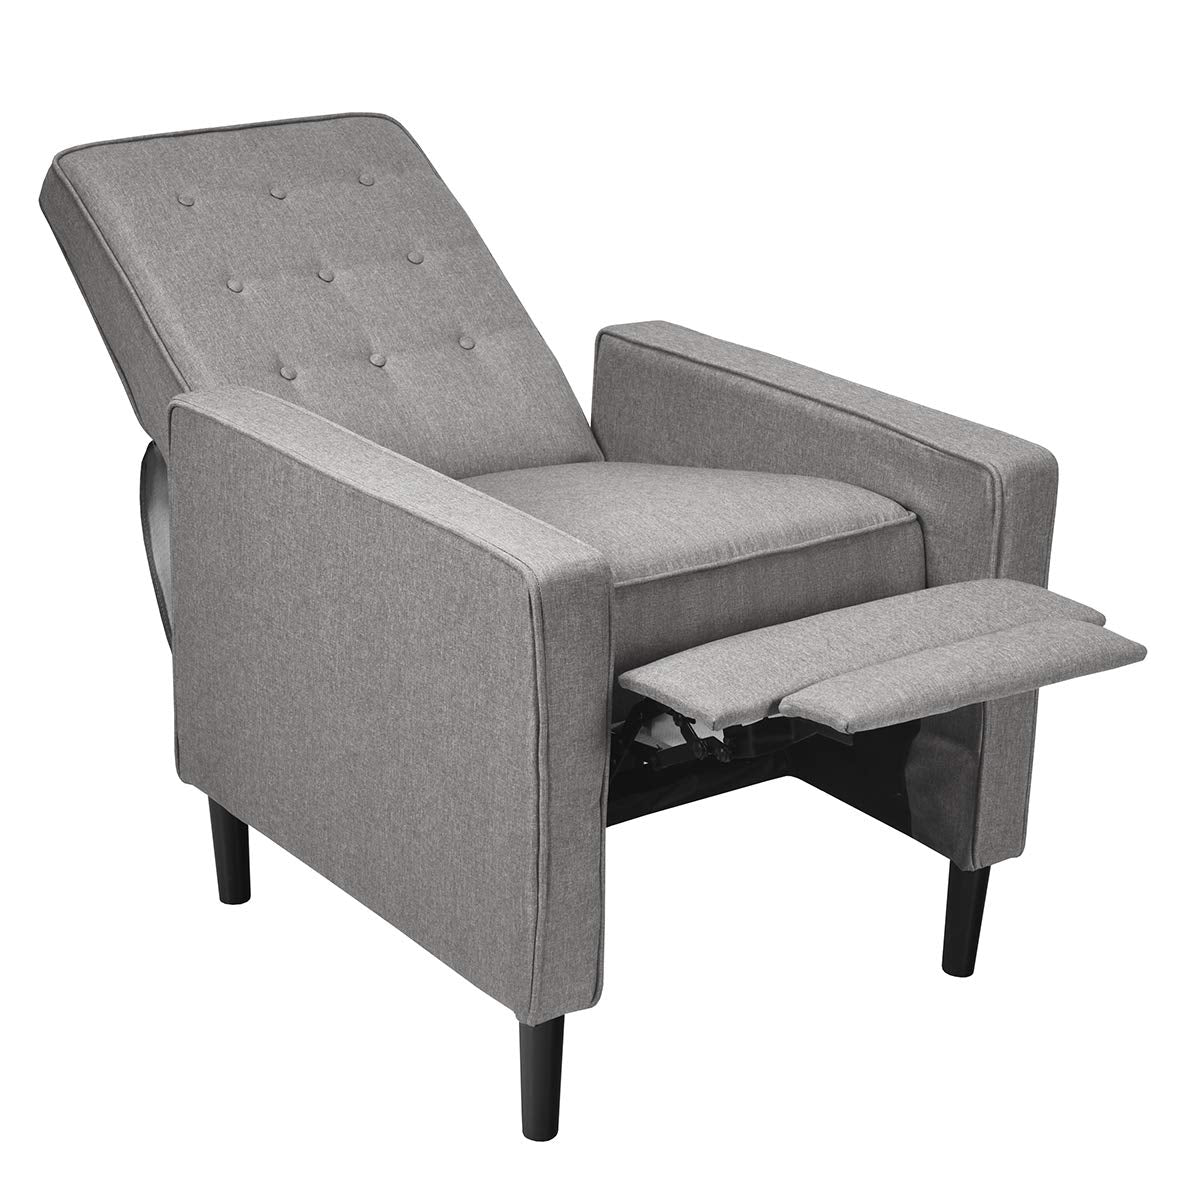 Relining Sofa Chair, Ergonomic Armchair w/ Footrest